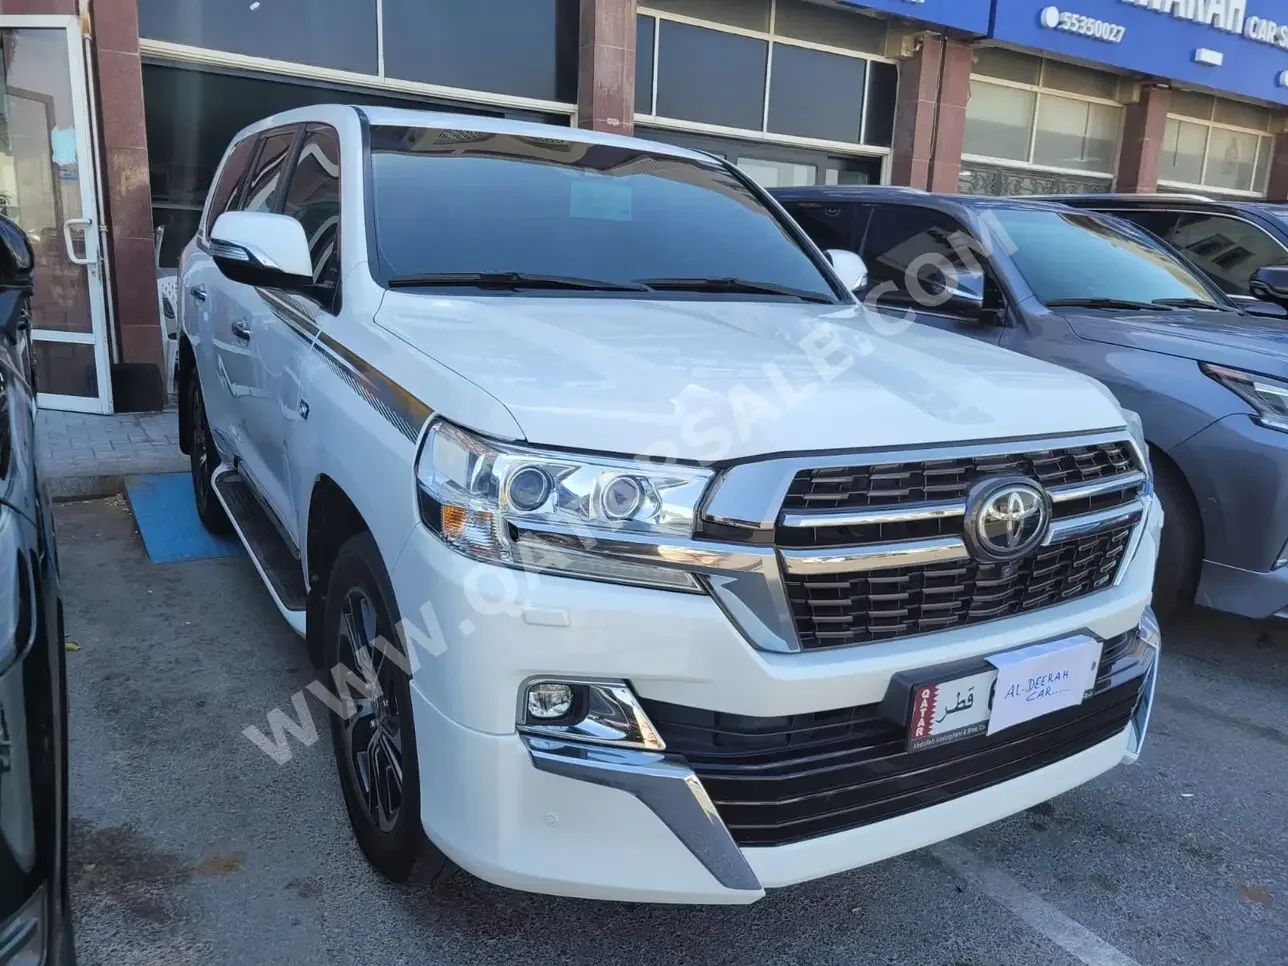 Toyota  Land Cruiser  VXR  2016  Automatic  188,000 Km  8 Cylinder  Four Wheel Drive (4WD)  SUV  White